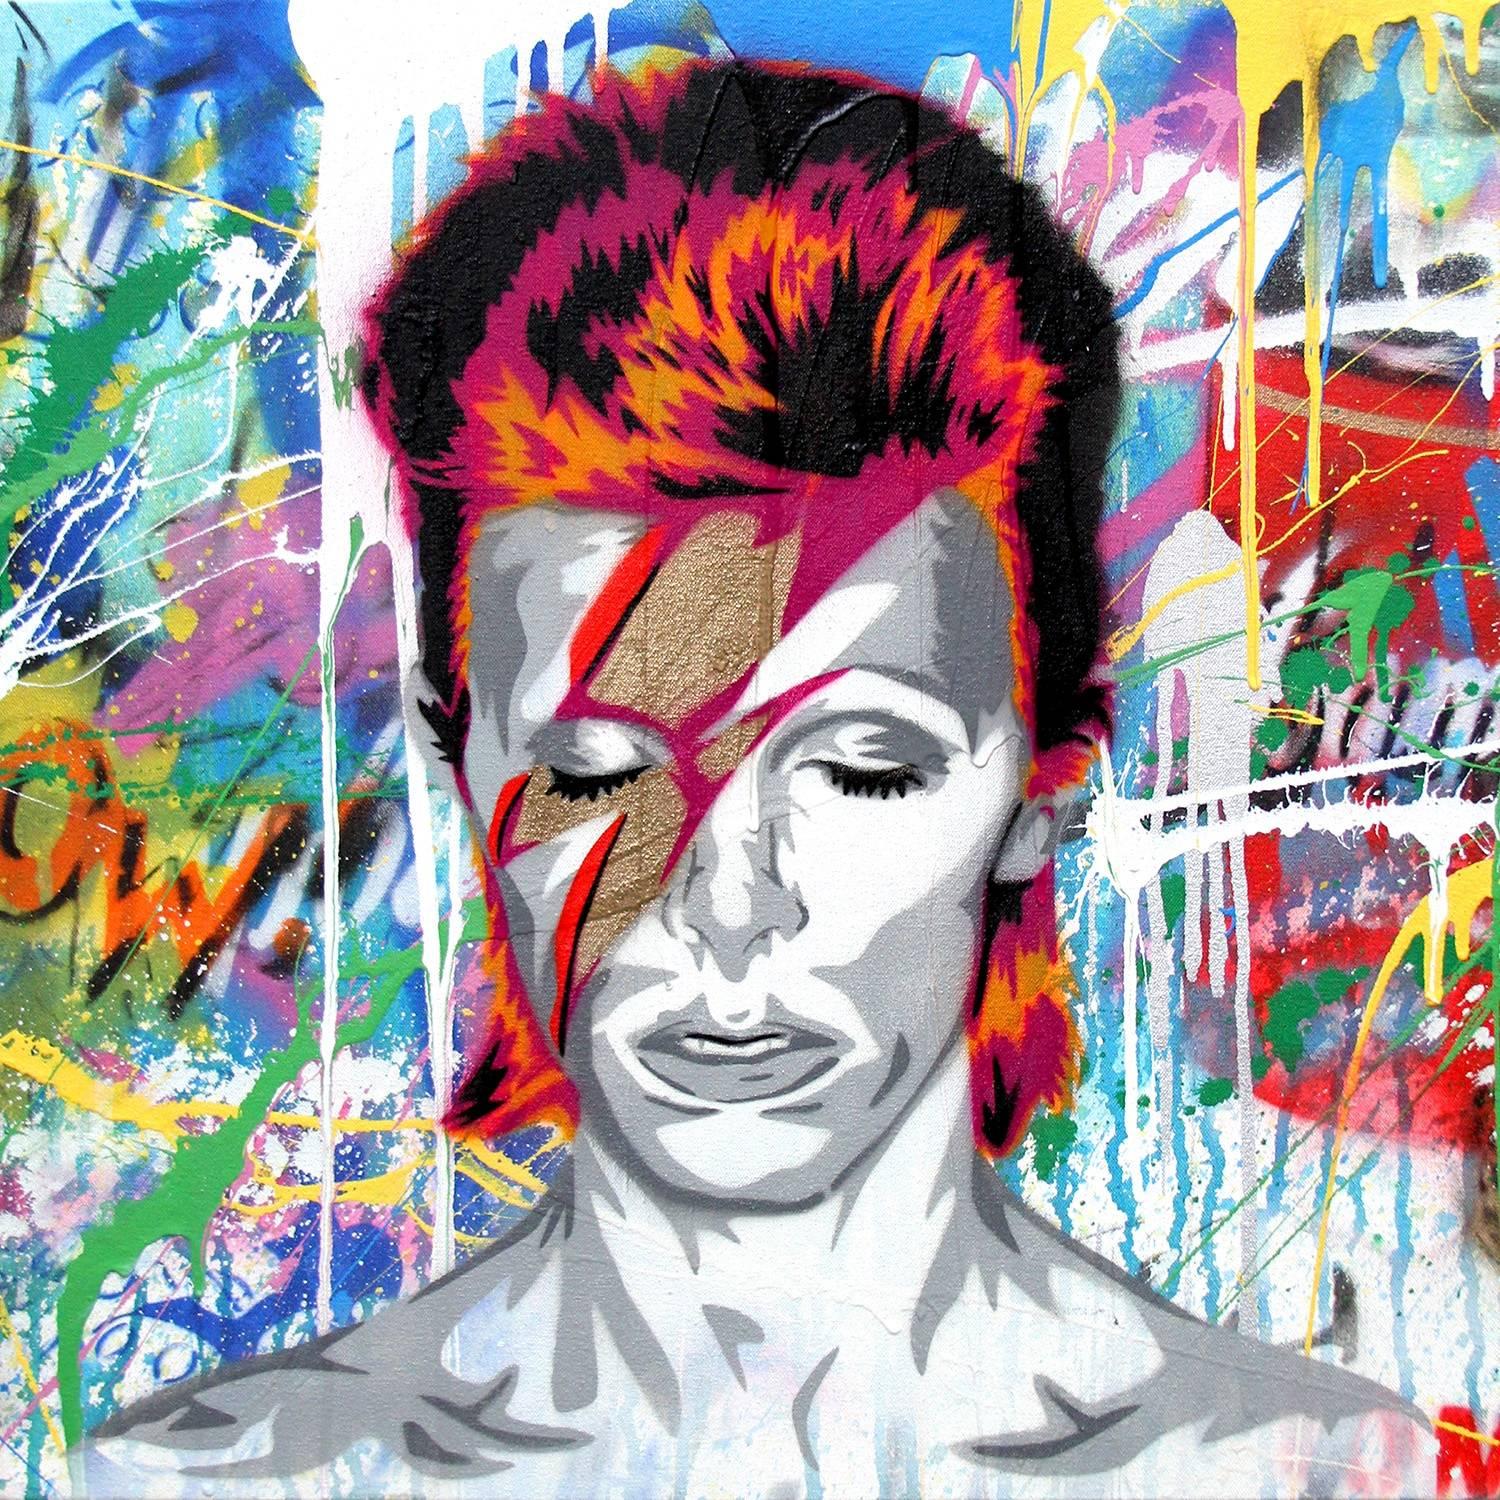 David Bowie - Painting by Mr. Brainwash